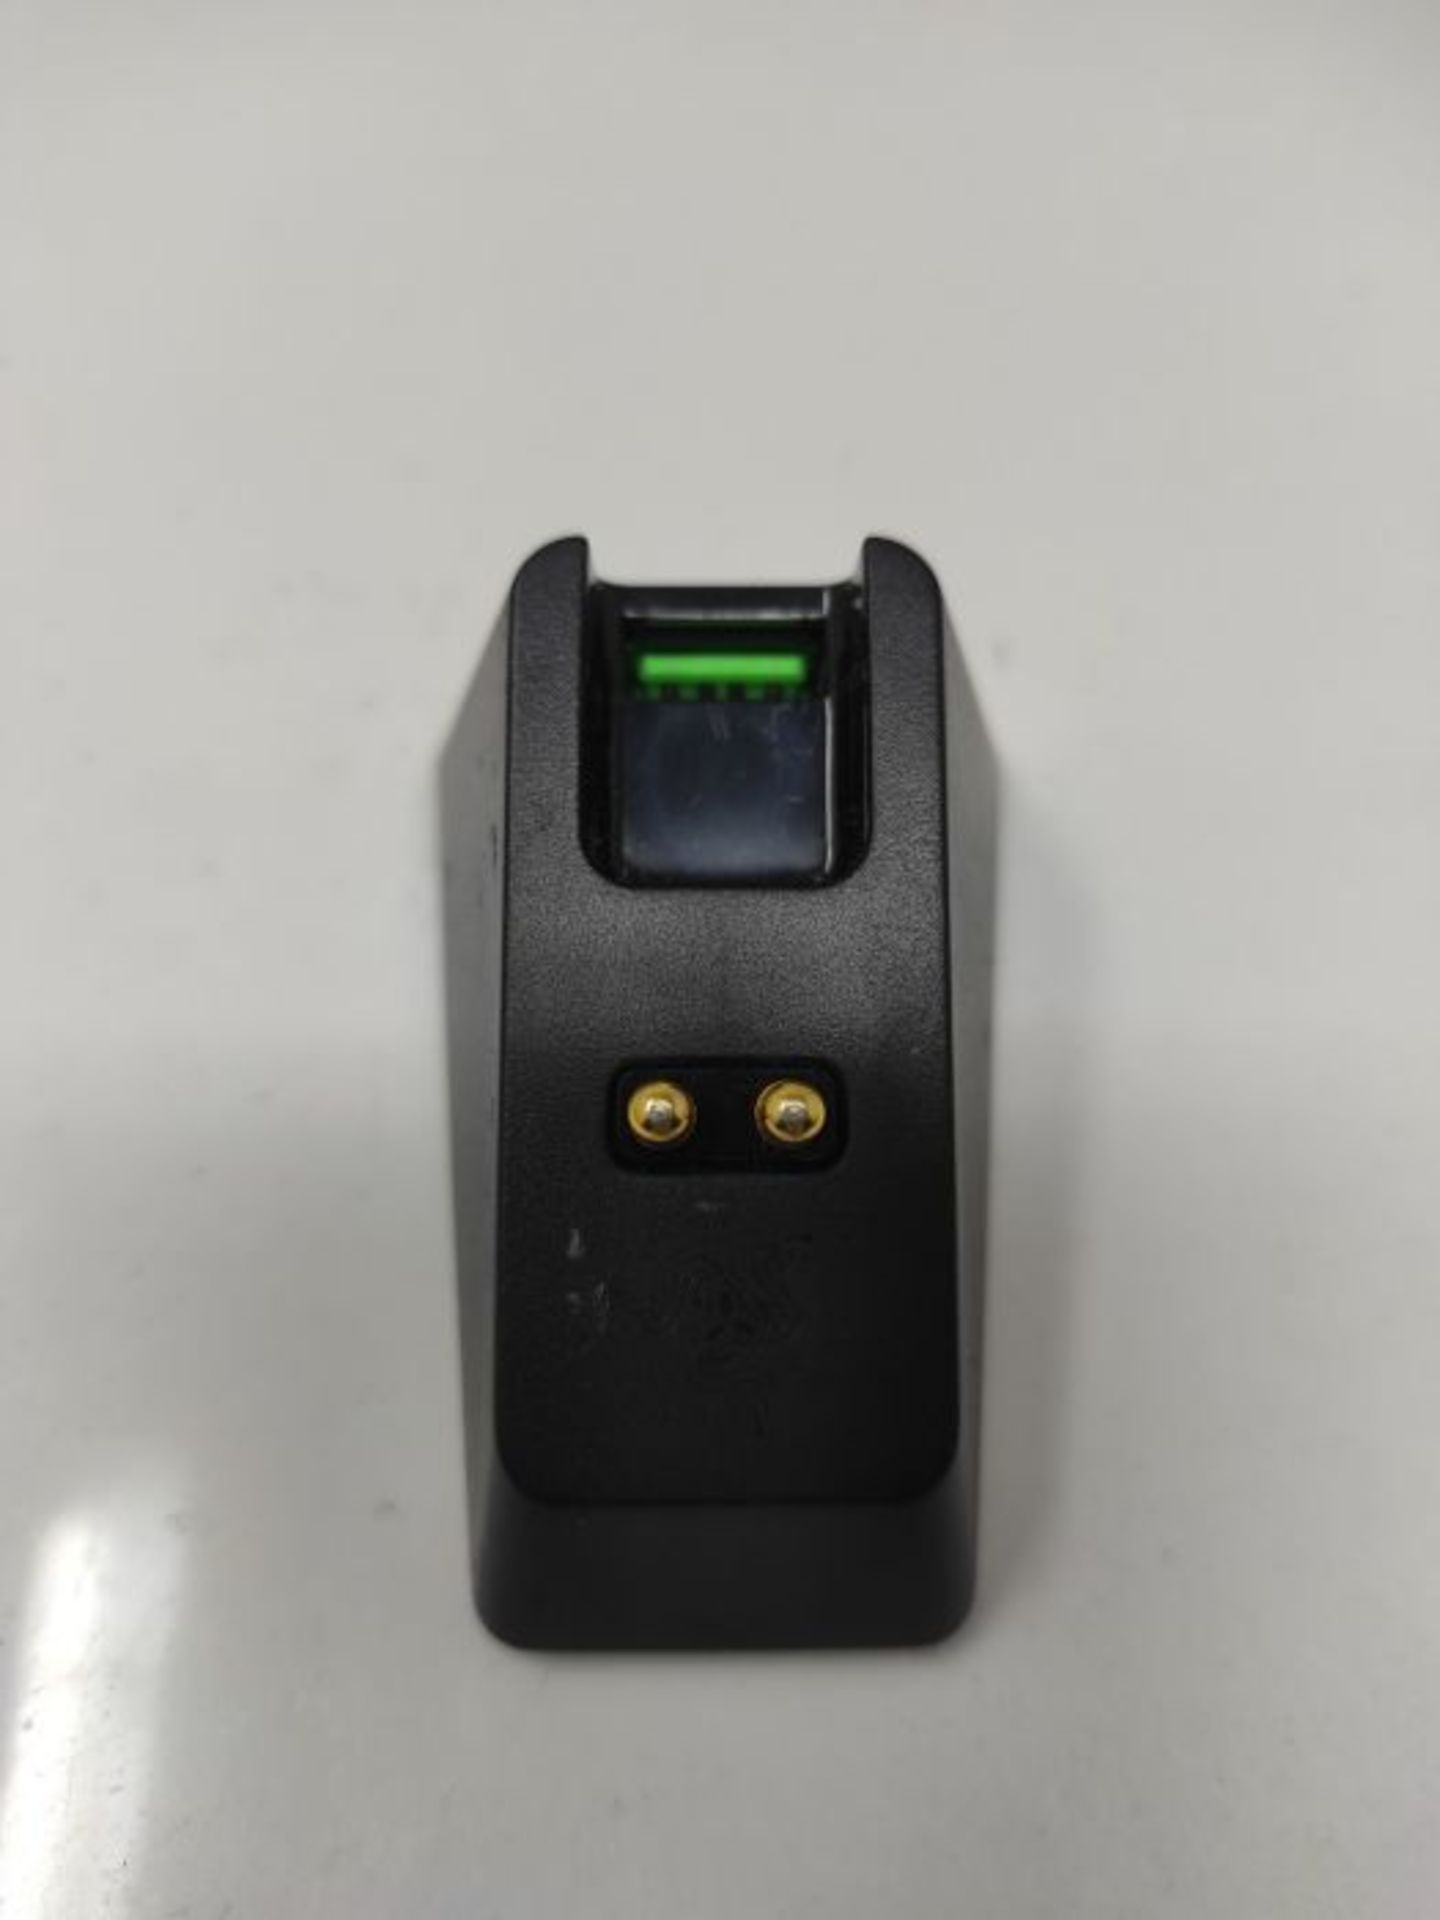 Razer Mouse Dock Chroma - Charging Station with RGB Lighting for DeathAdder V2 Pro, Vi - Image 3 of 3